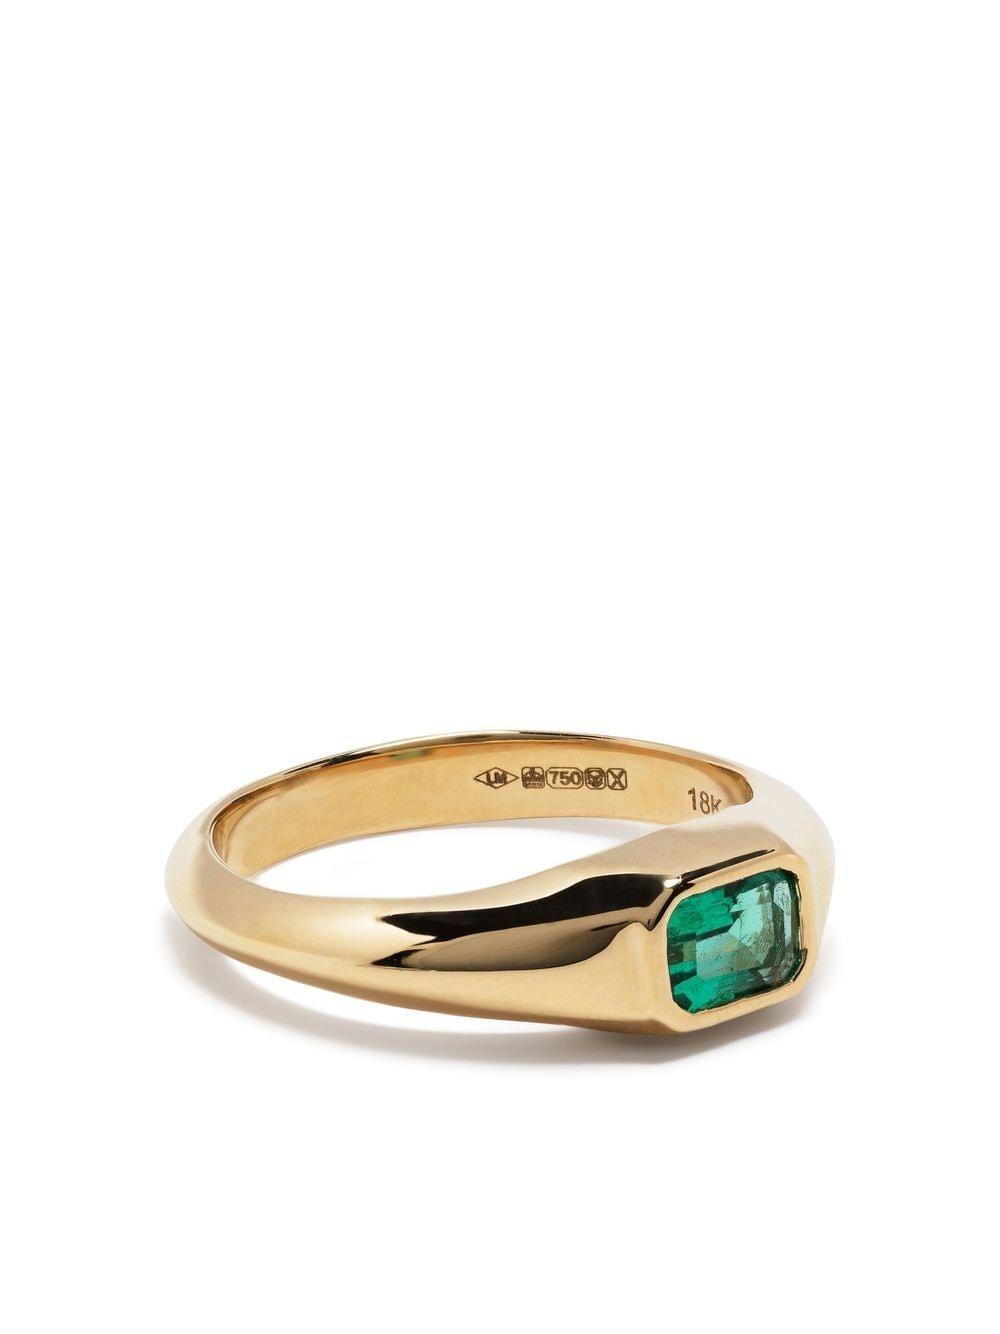 Lizzie Mandler Fine Jewelry 18kt yellow gold emerald signet ring von Lizzie Mandler Fine Jewelry